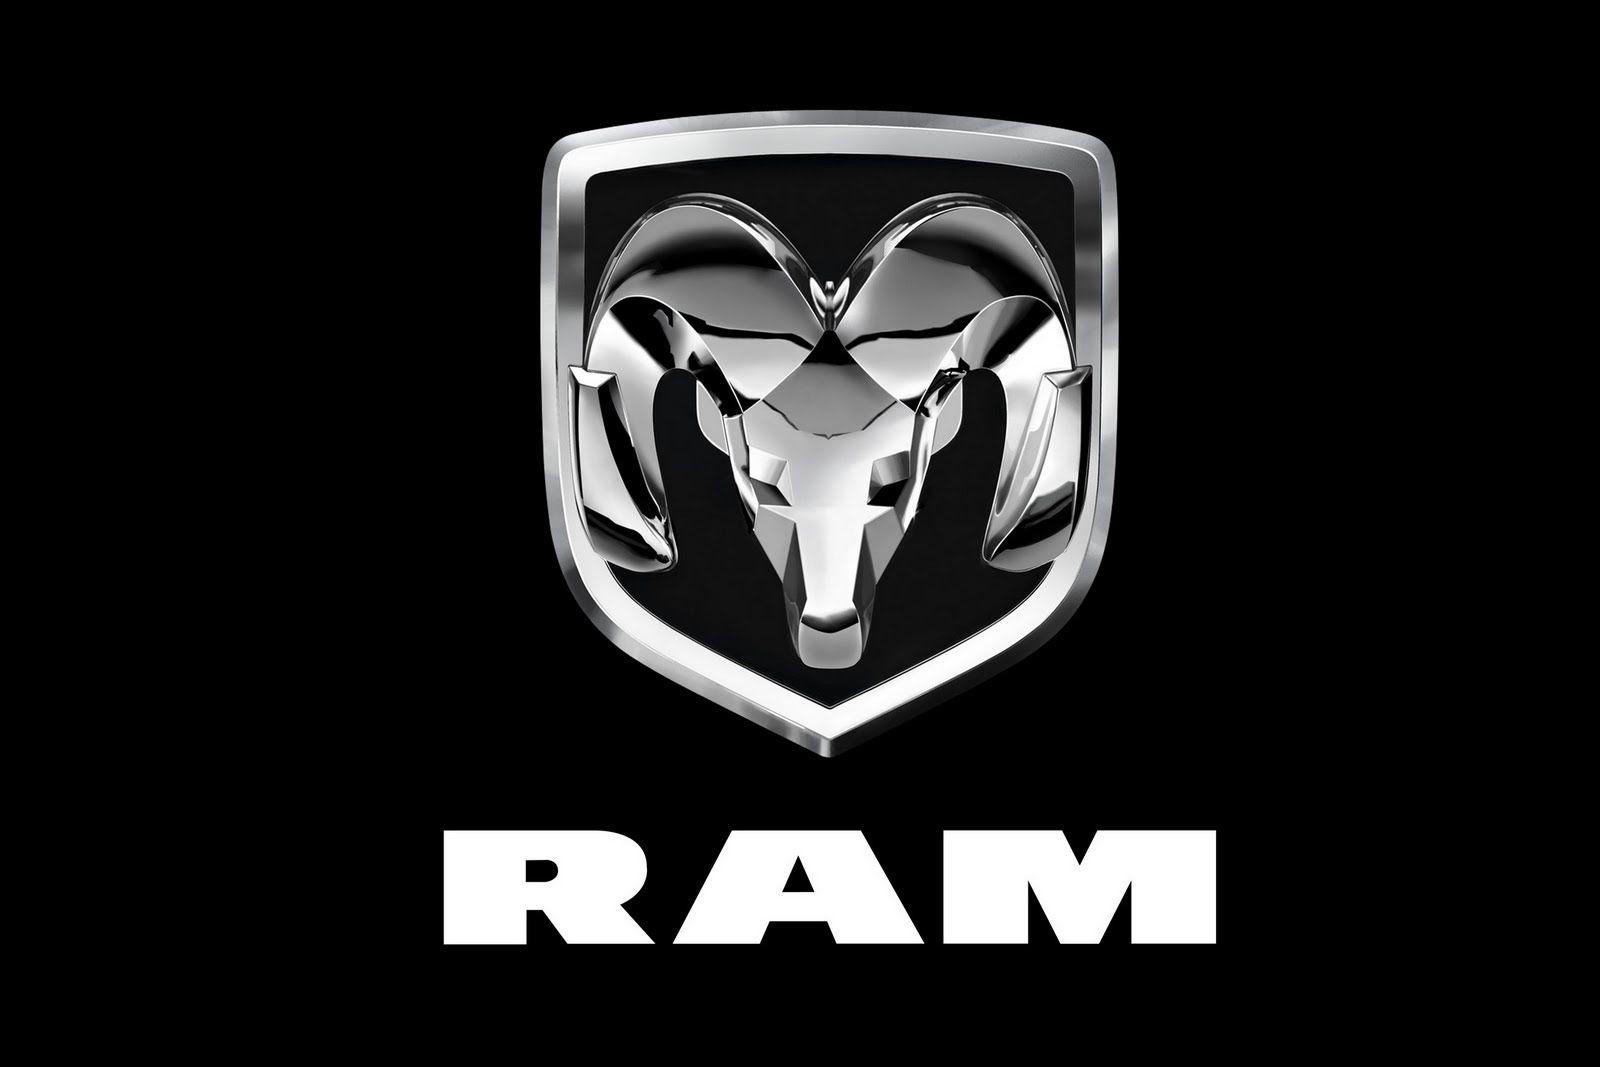 Dodge Ram Logo Wallpaper 33877 1600x1067 px